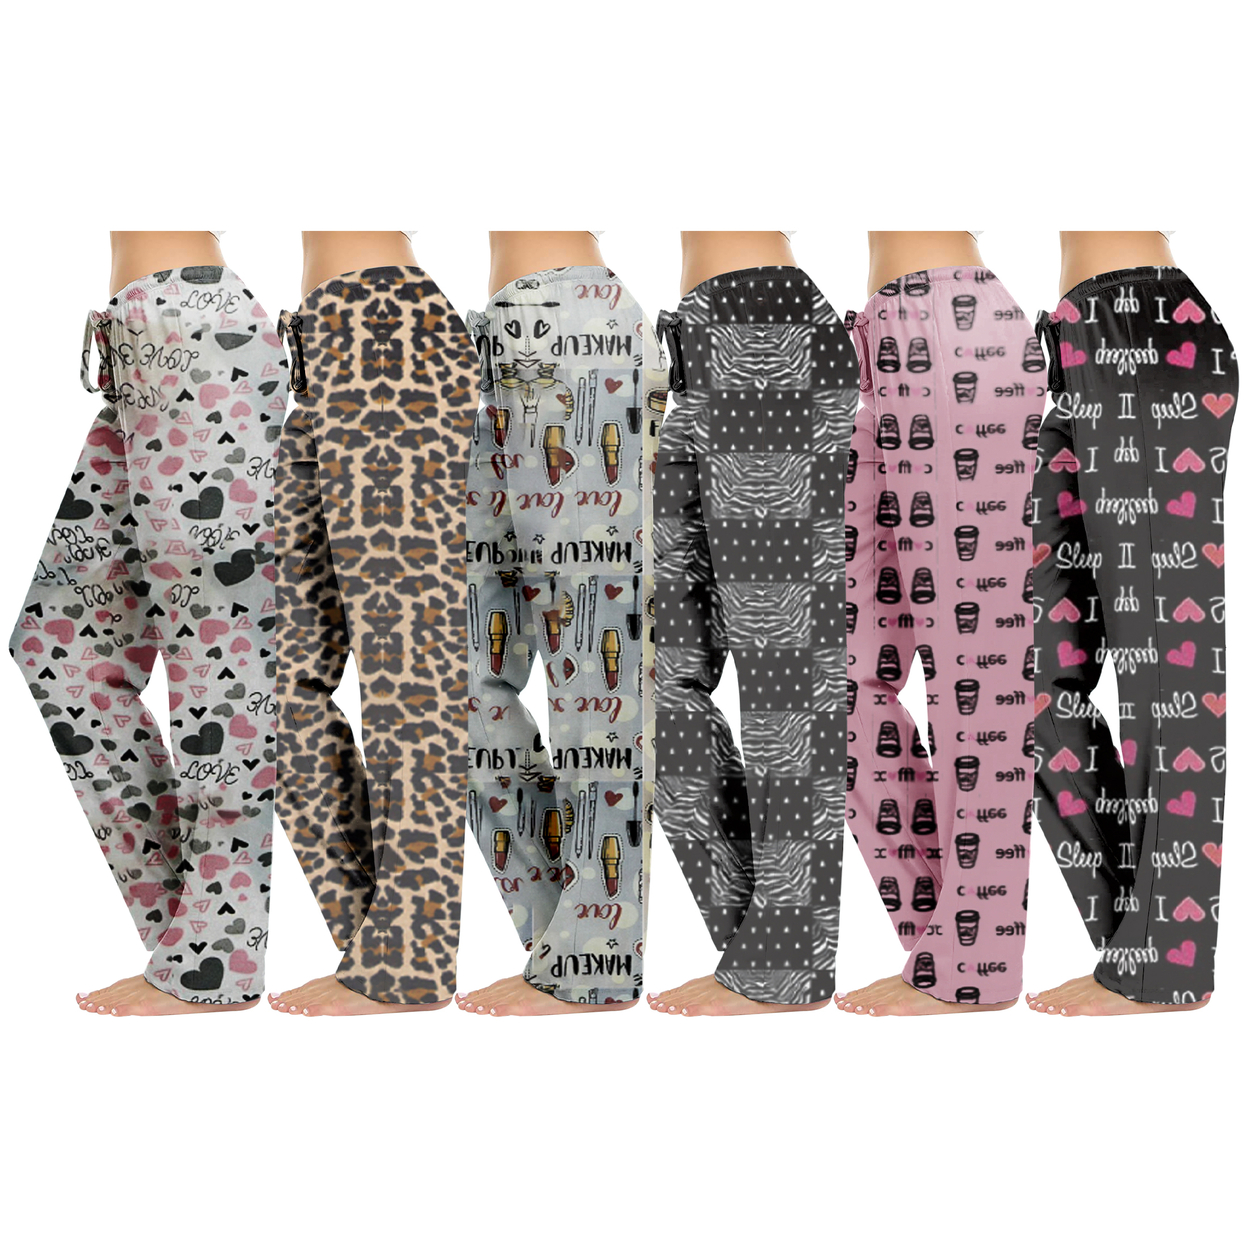 3-Pack: Women's Casual Fun Printed Lightweight Lounge Terry Knit Pajama Bottom Pants - Large, Animal